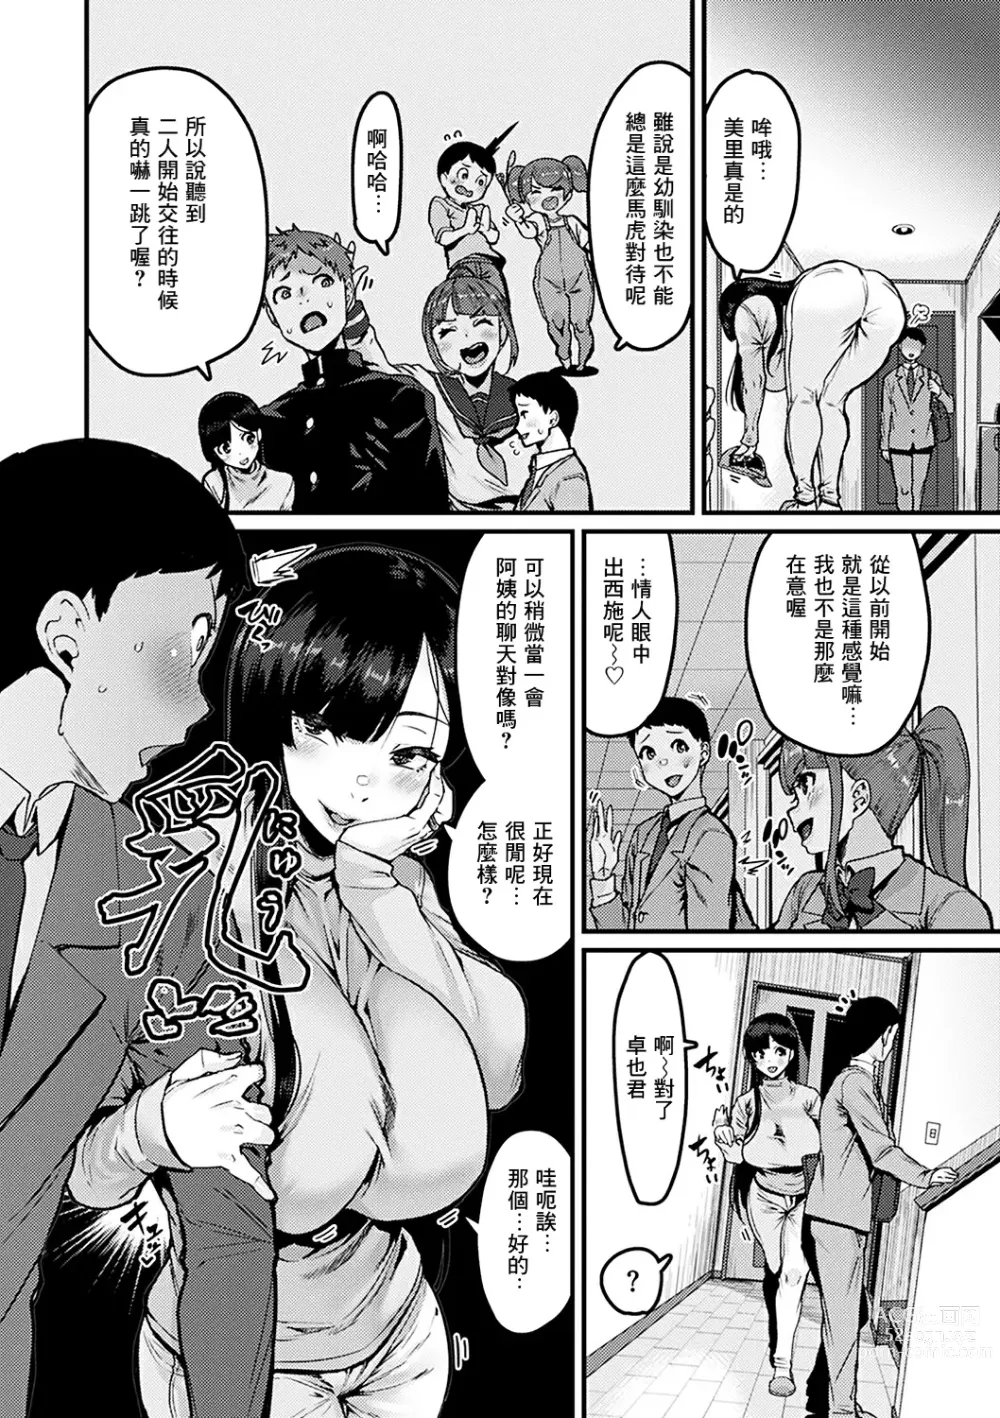 Page 2 of manga Wasurete Ii no!